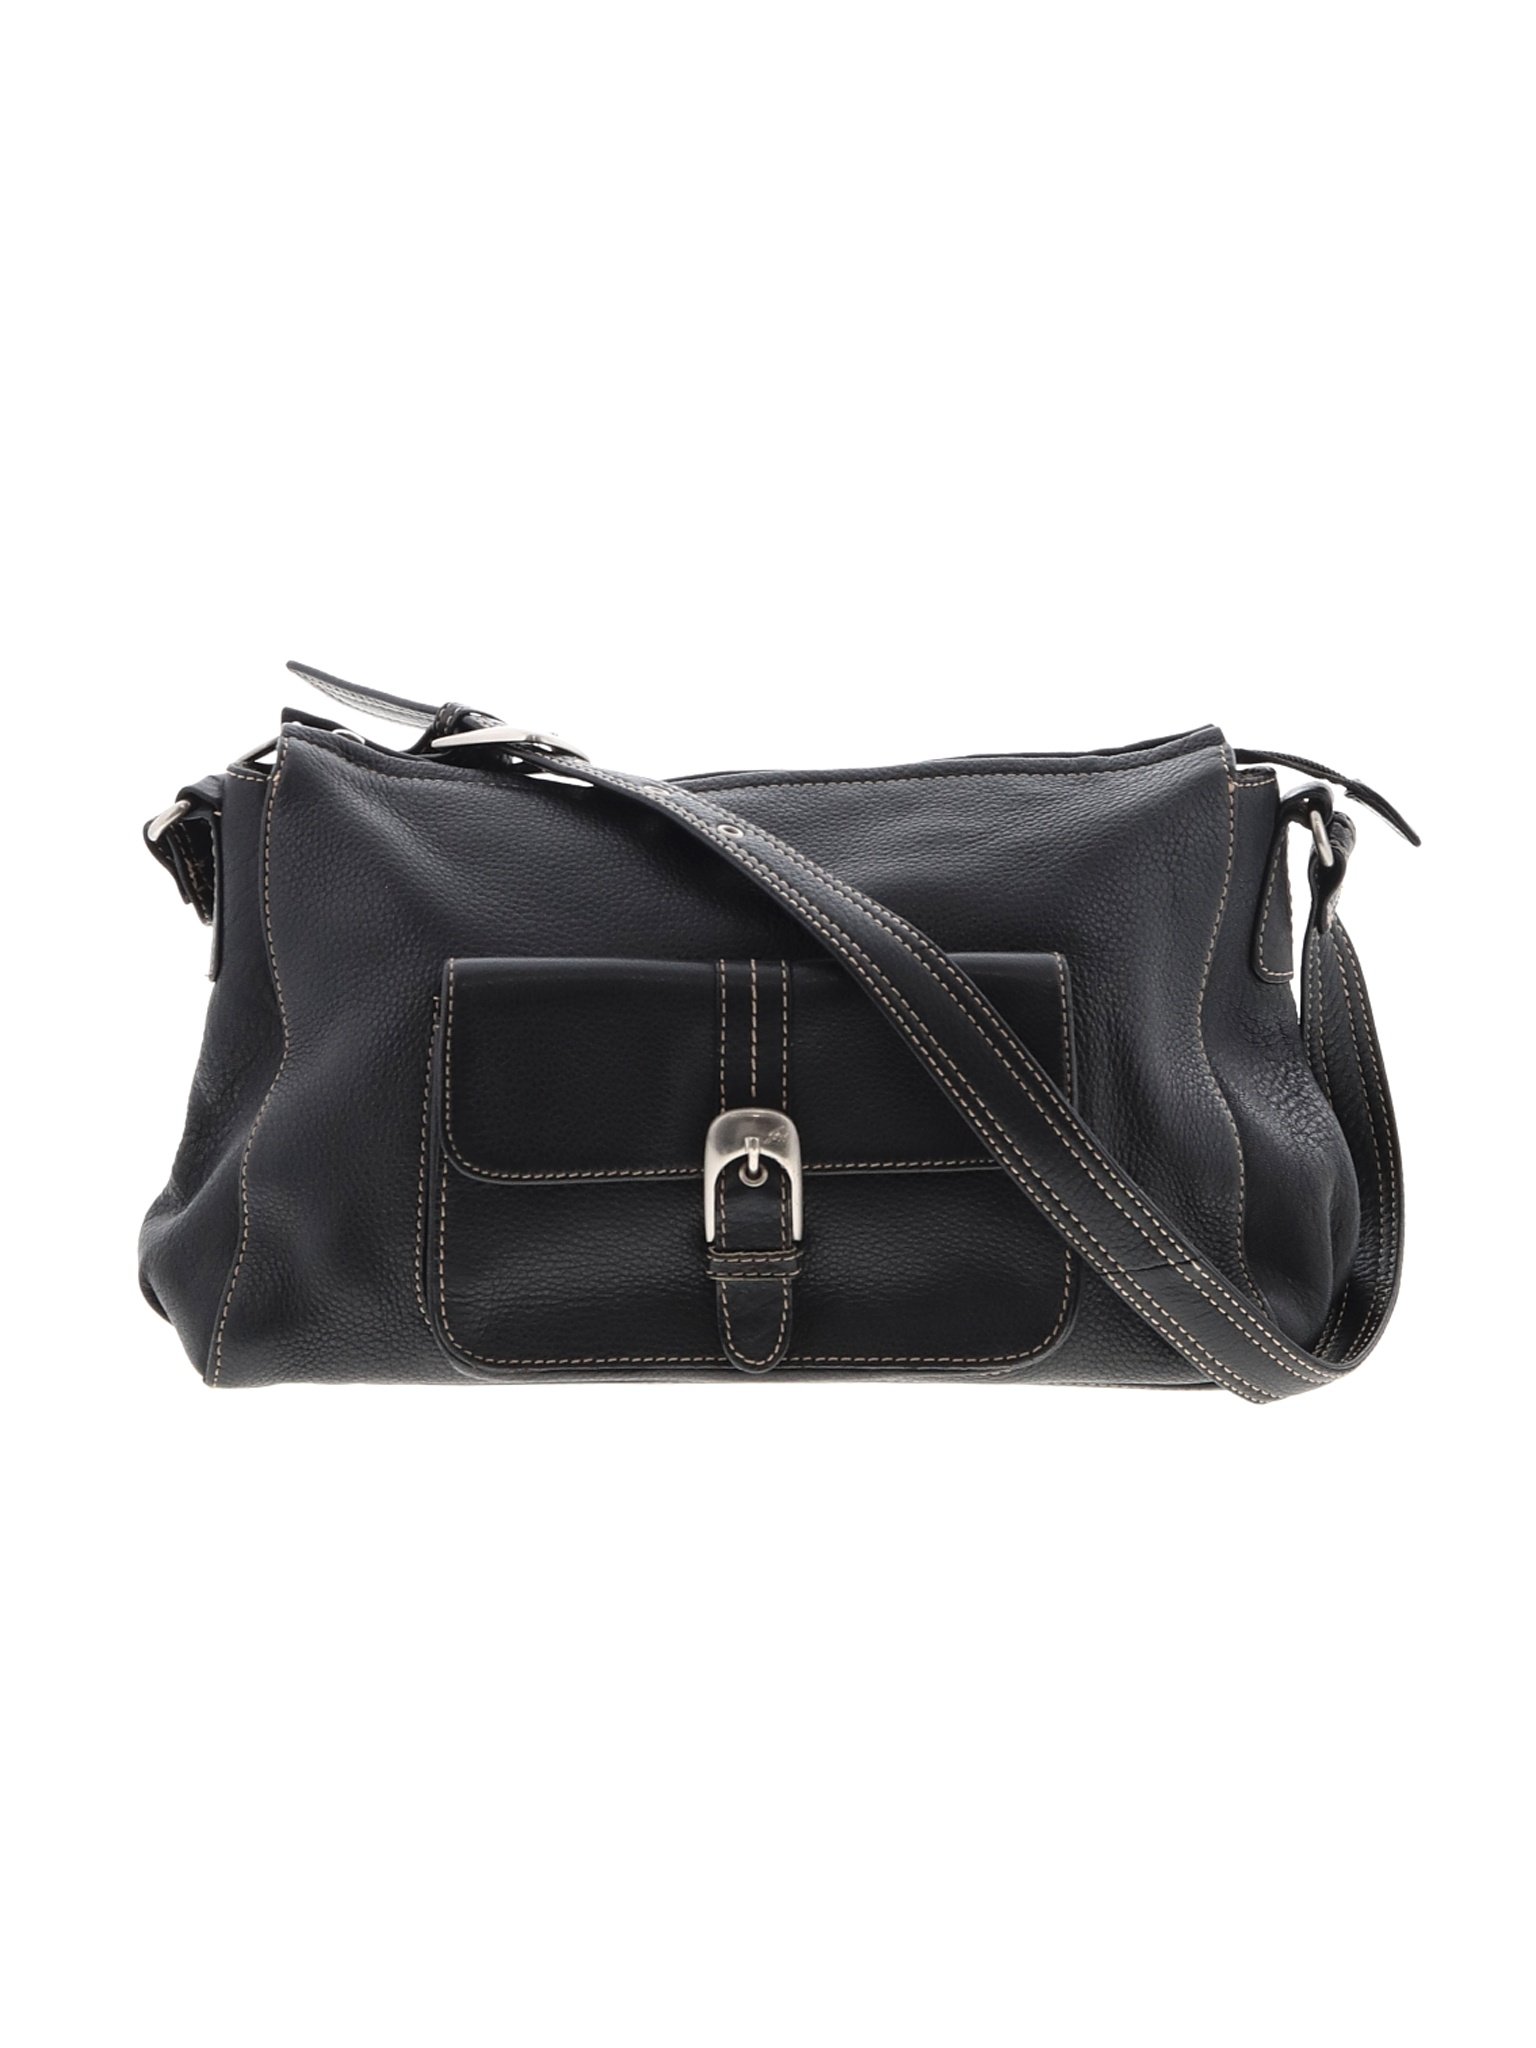 Stone Mountain Women Black Leather Shoulder Bag One Size | eBay